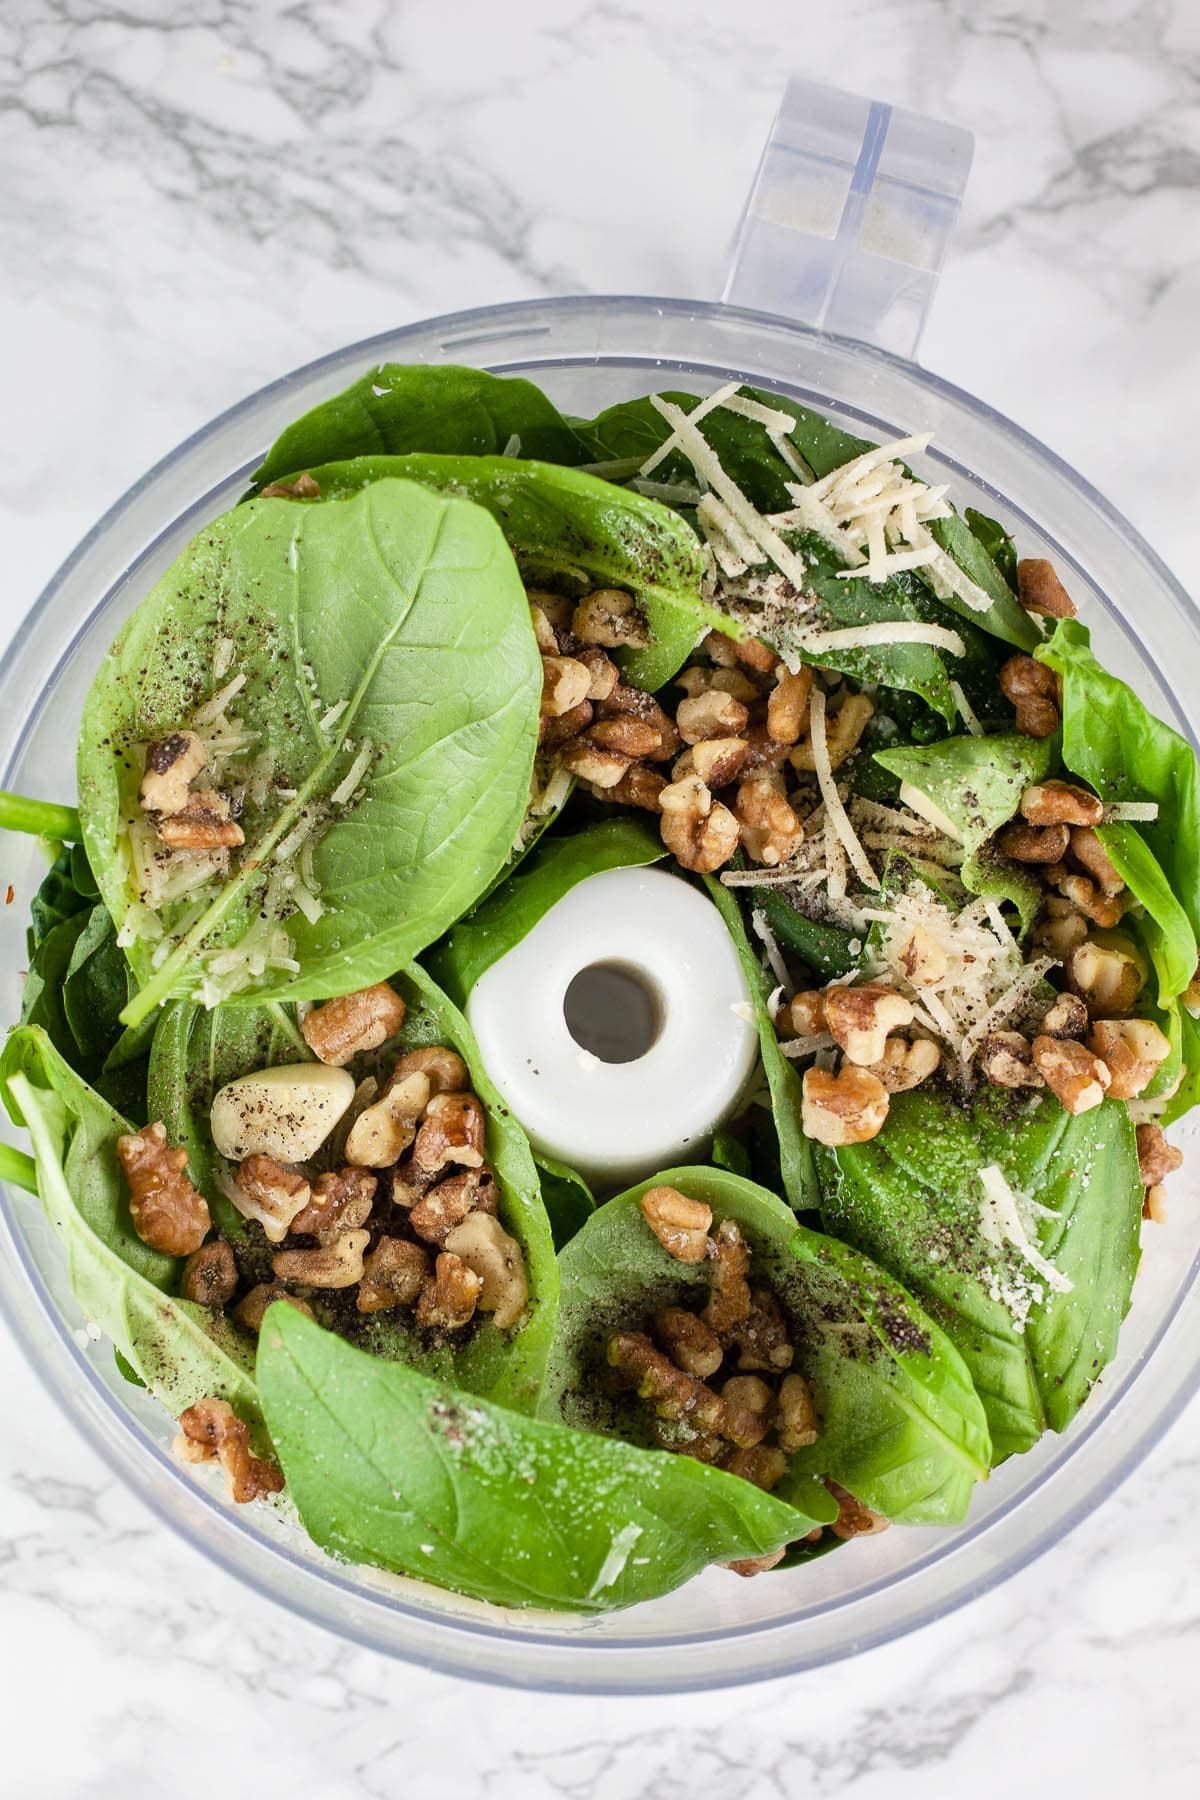 Spinach basil walnut pesto ingredients unpulsed in food processor.